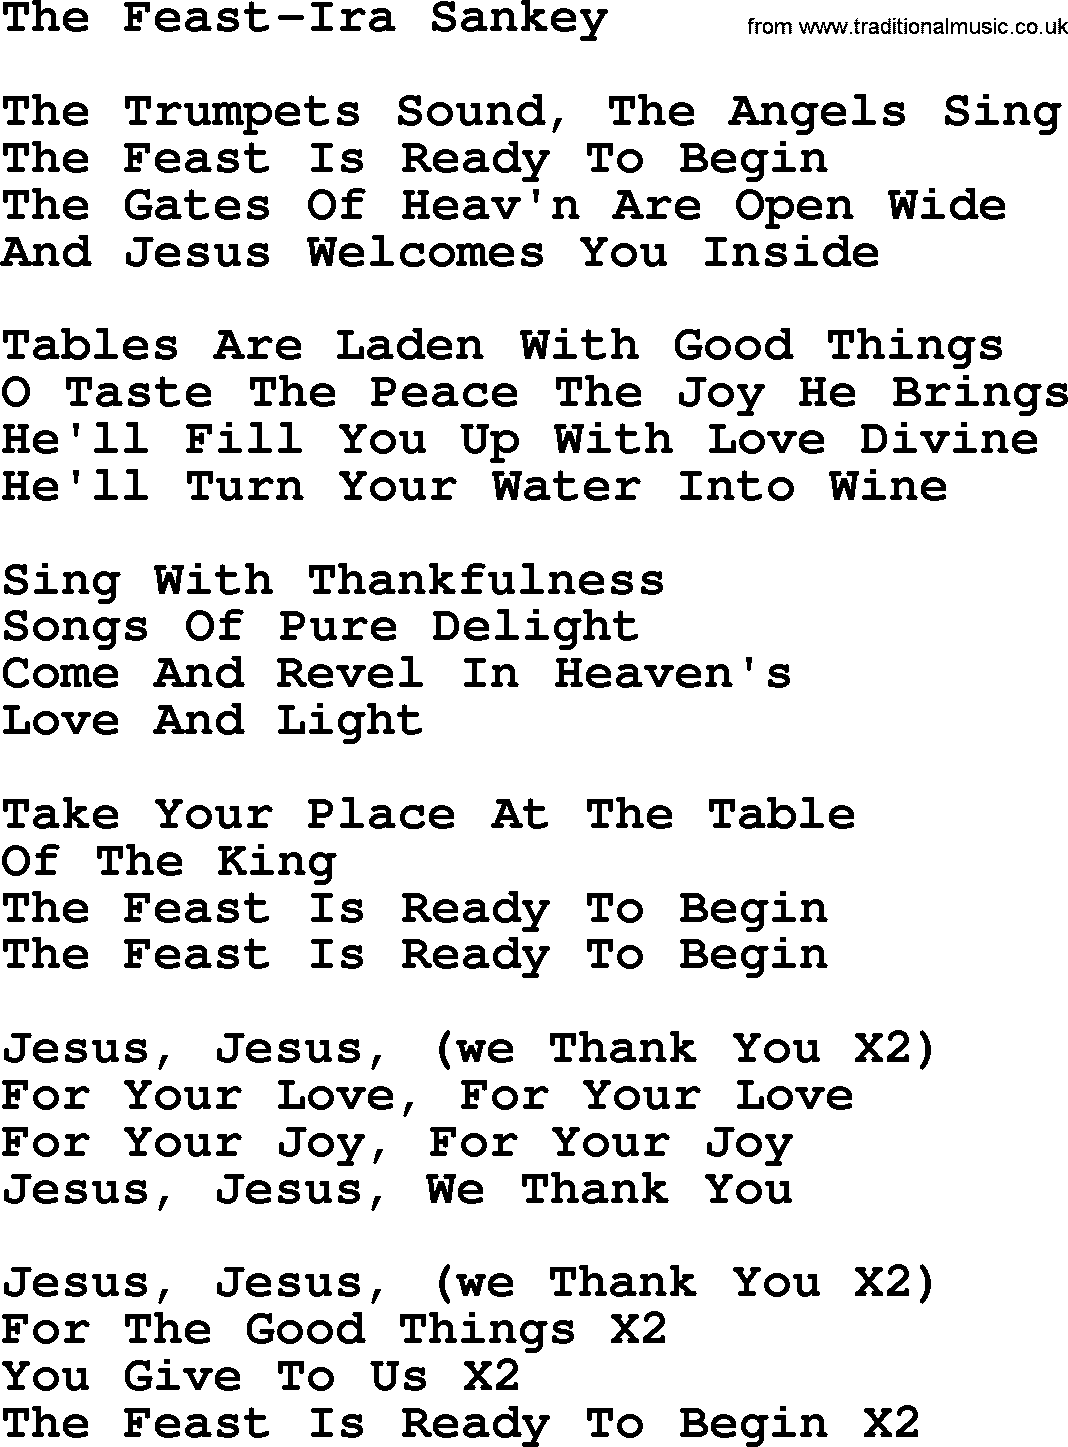 Ira Sankey hymn: The Feast-Ira Sankey, lyrics